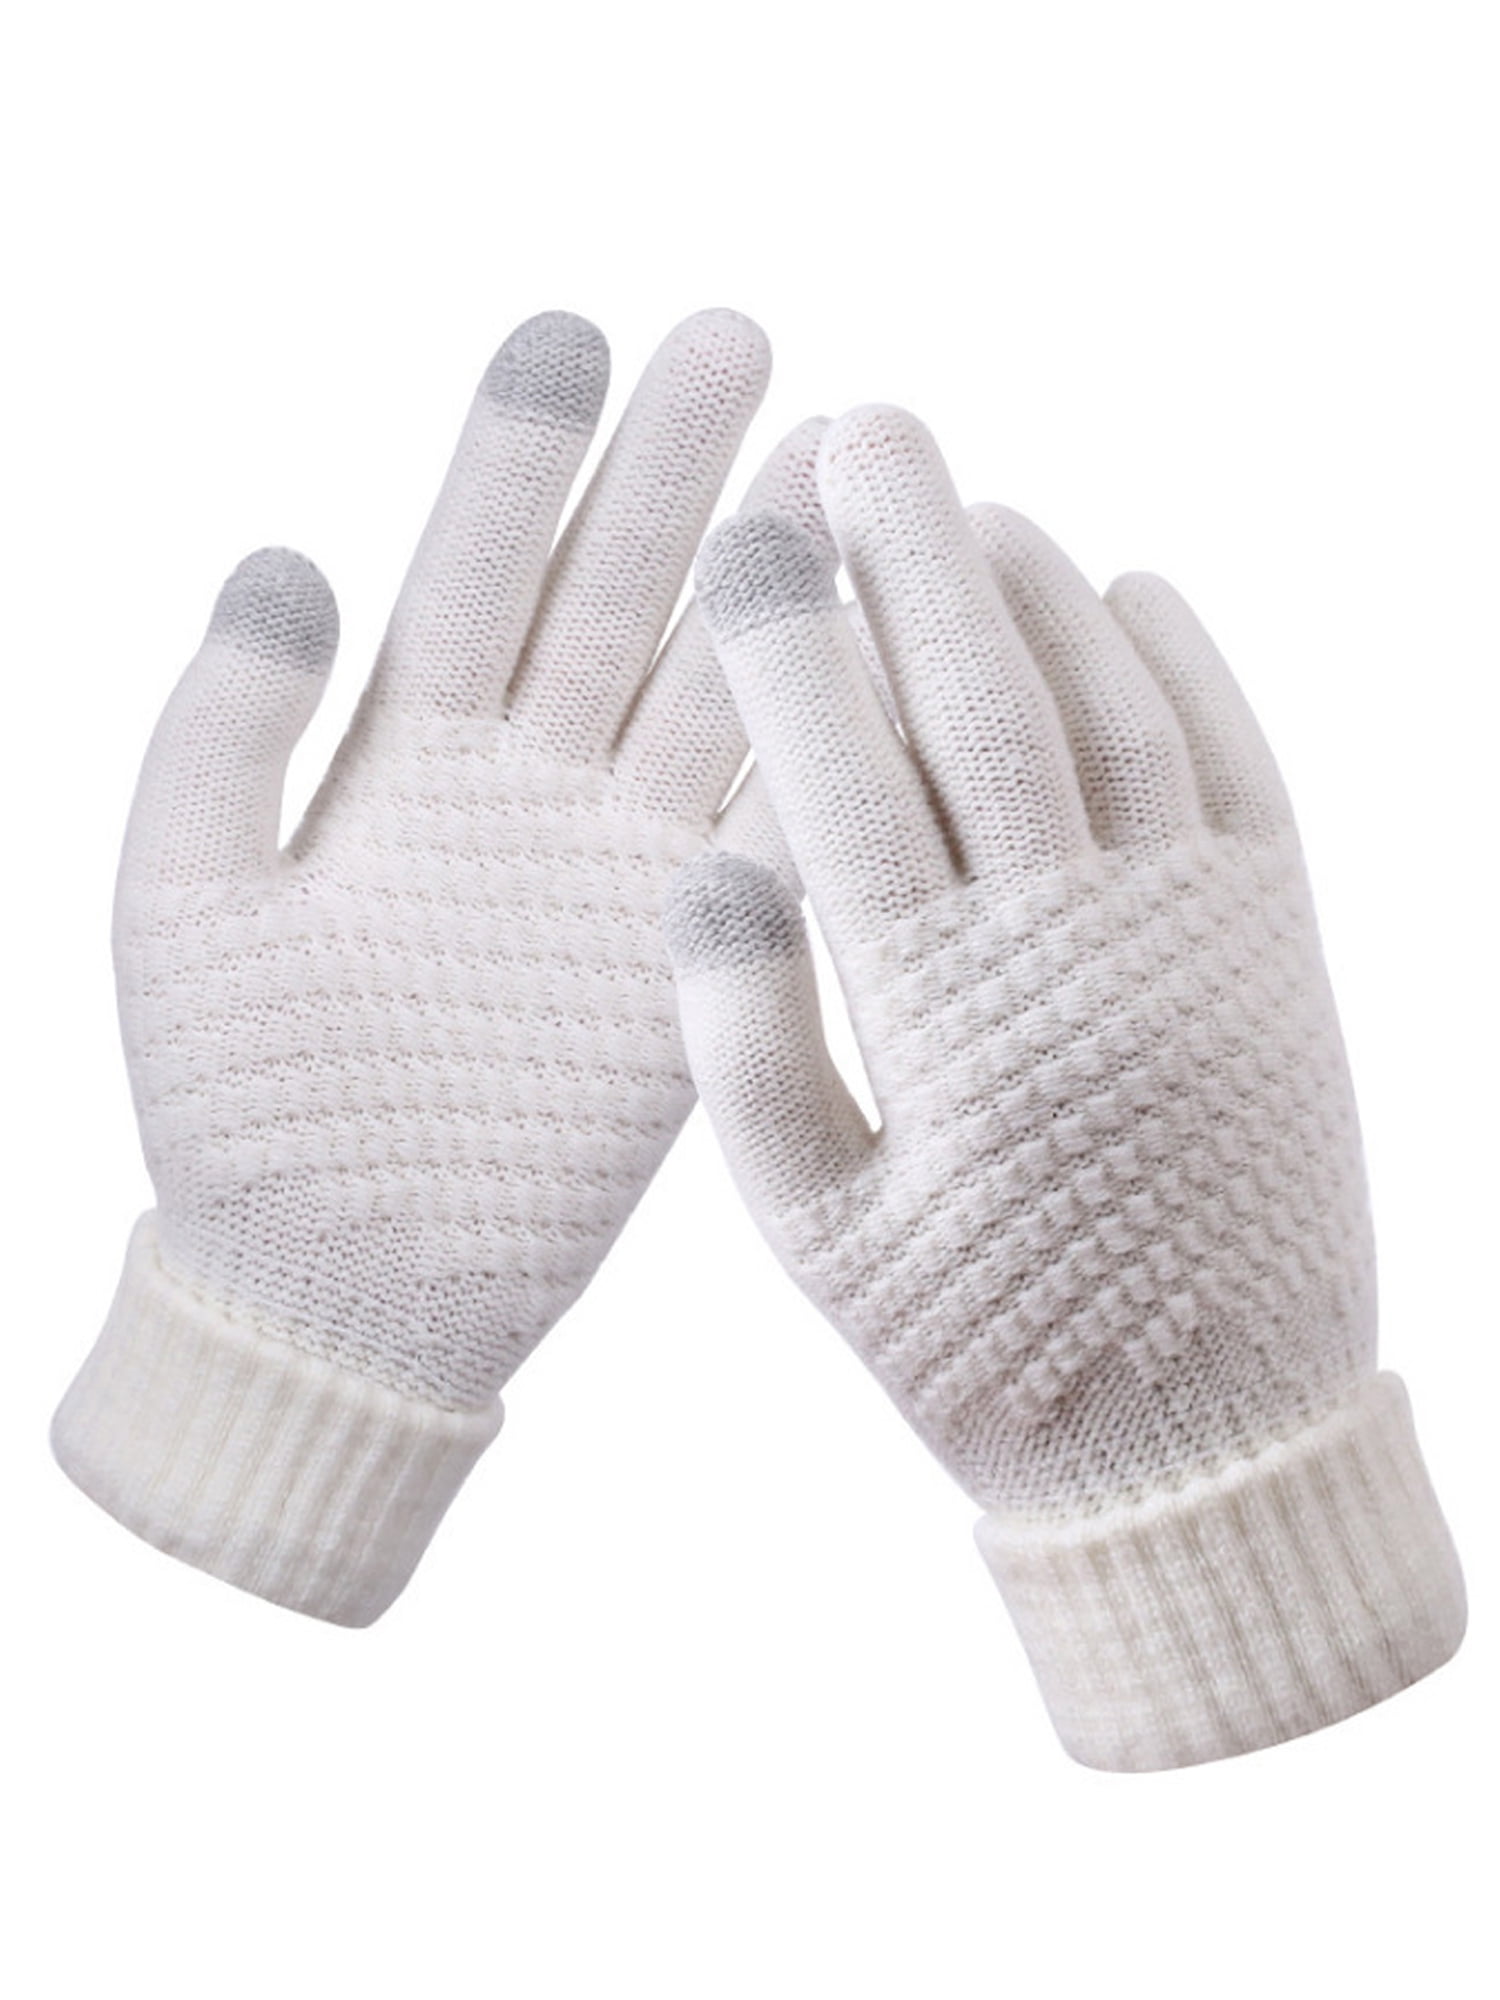 Women Touch Screen Gloves Winter Warm Knitted Glove Snow Flower Full finger Wool Windproof Touchscreen Mittens for Unisex Outdoor Driving Running 